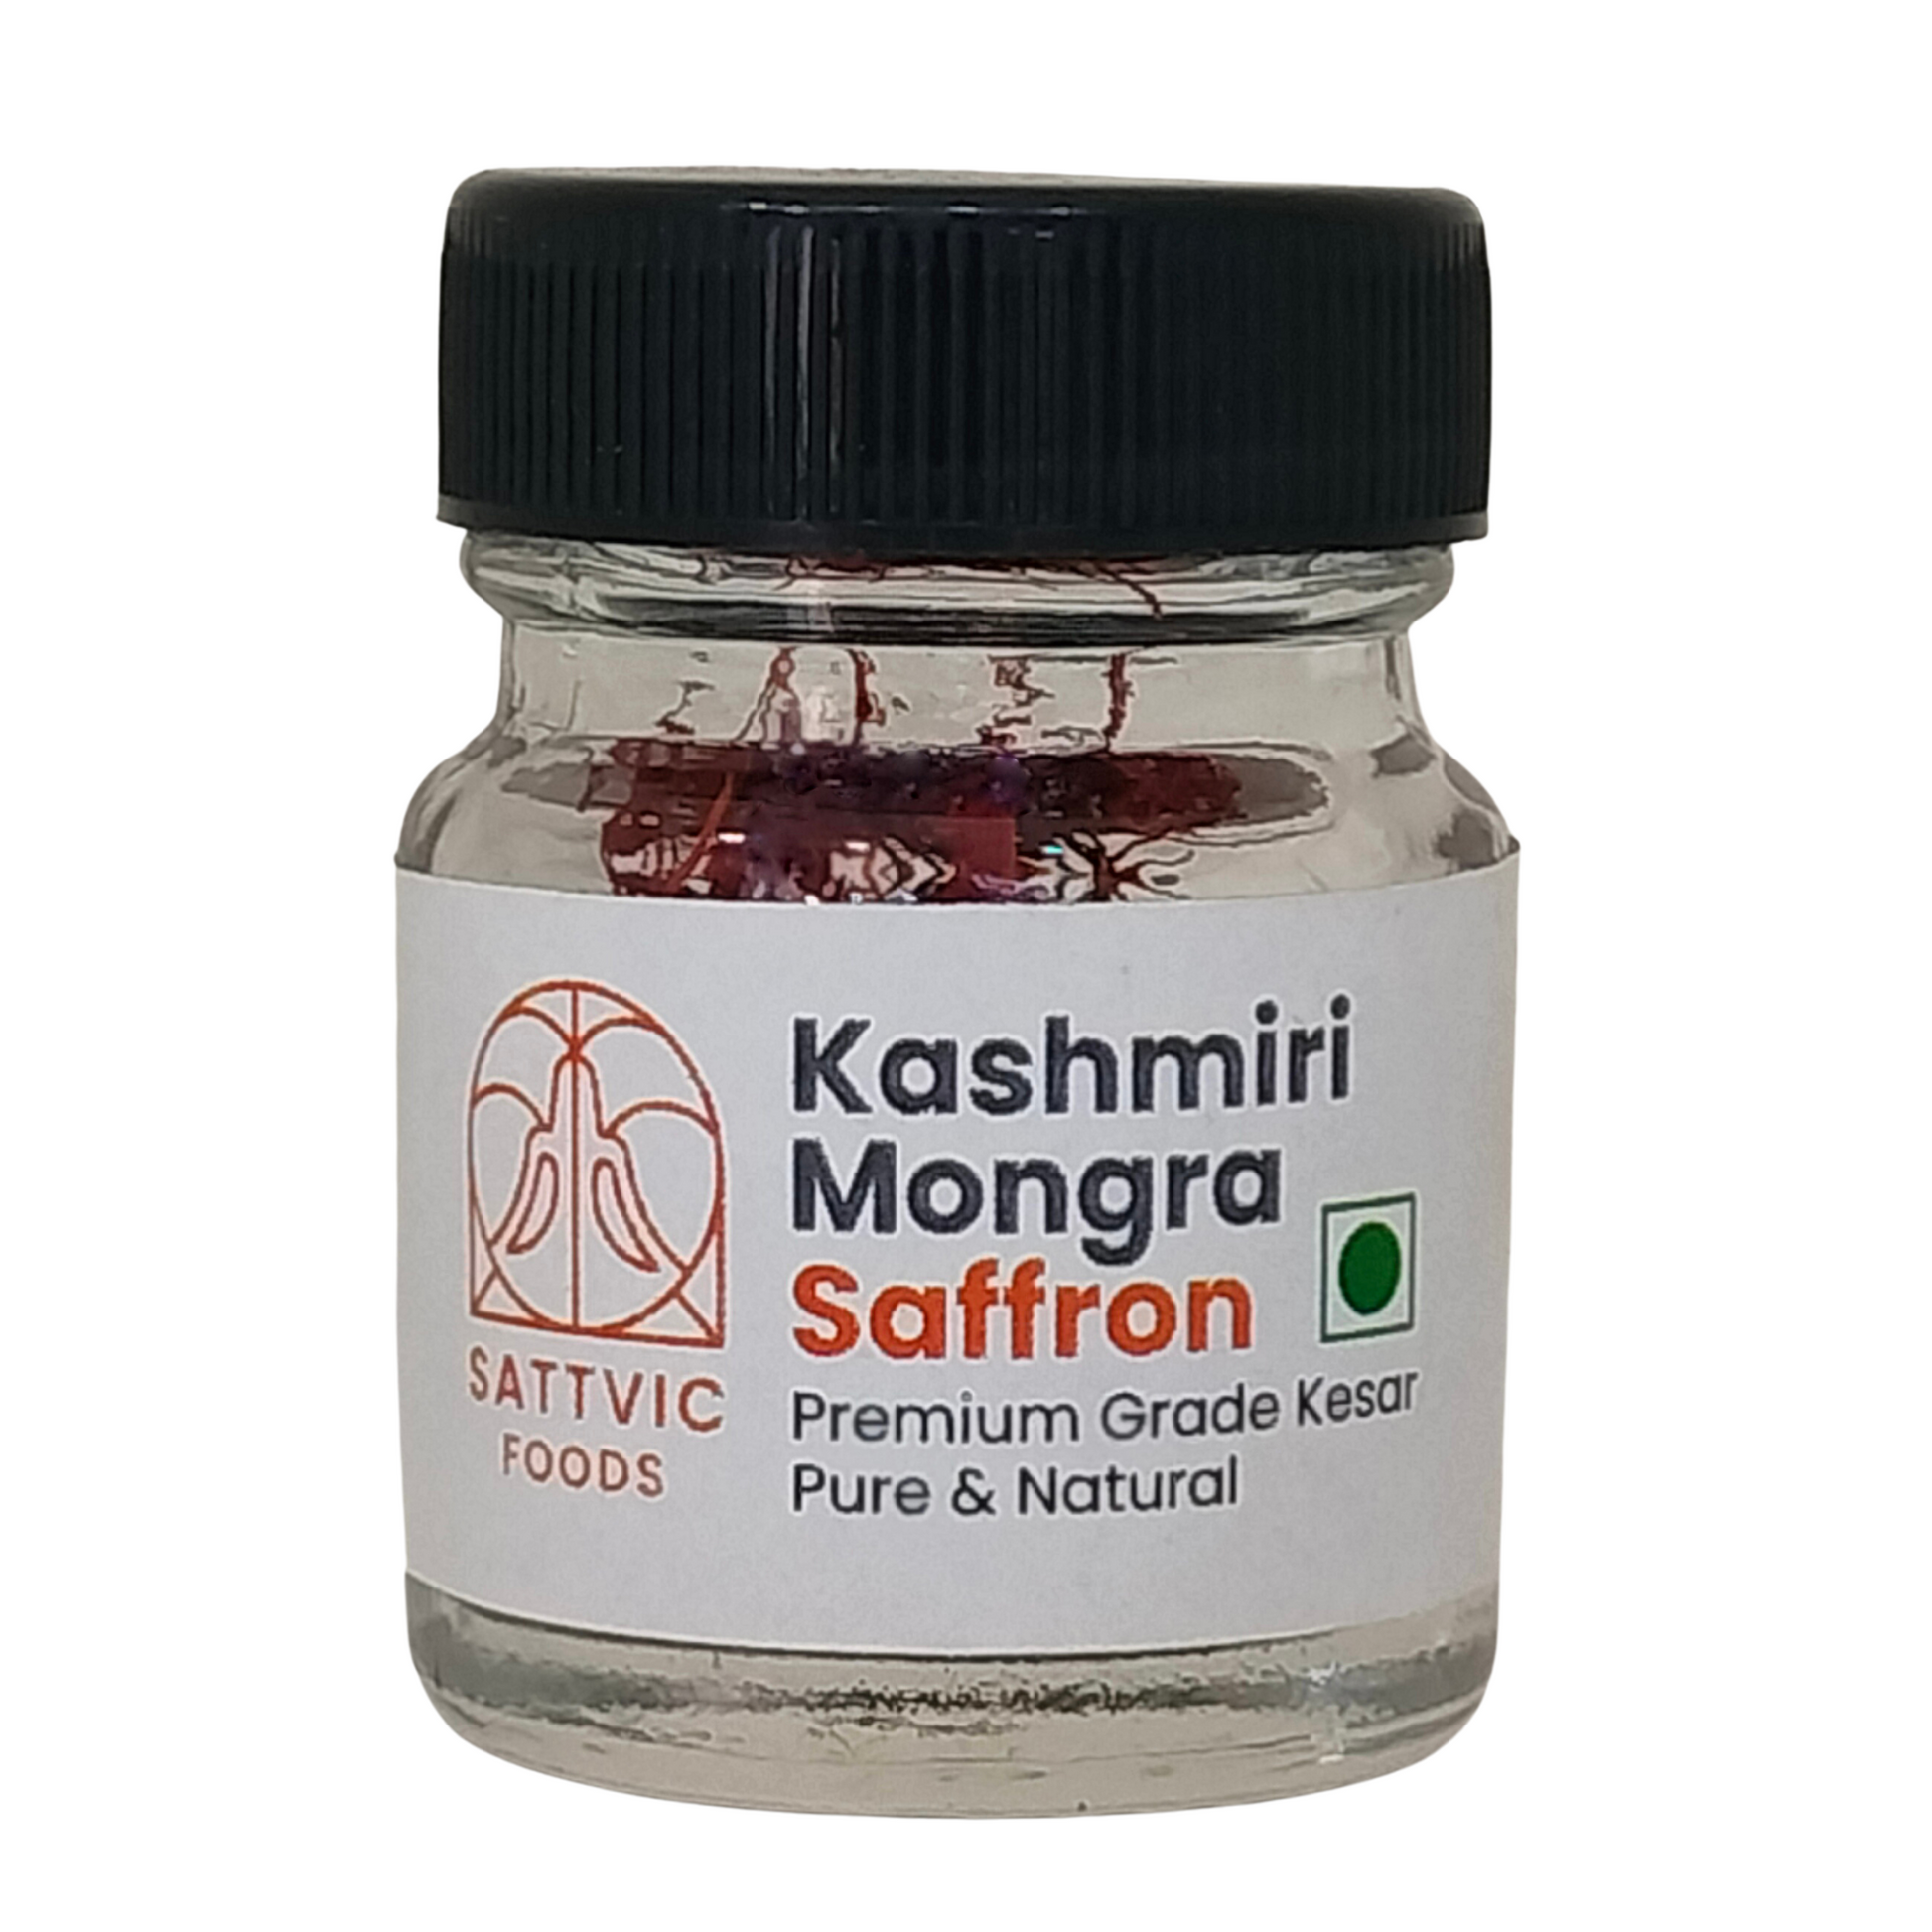 Kashmiri Mongra Saffron sattvicfoods